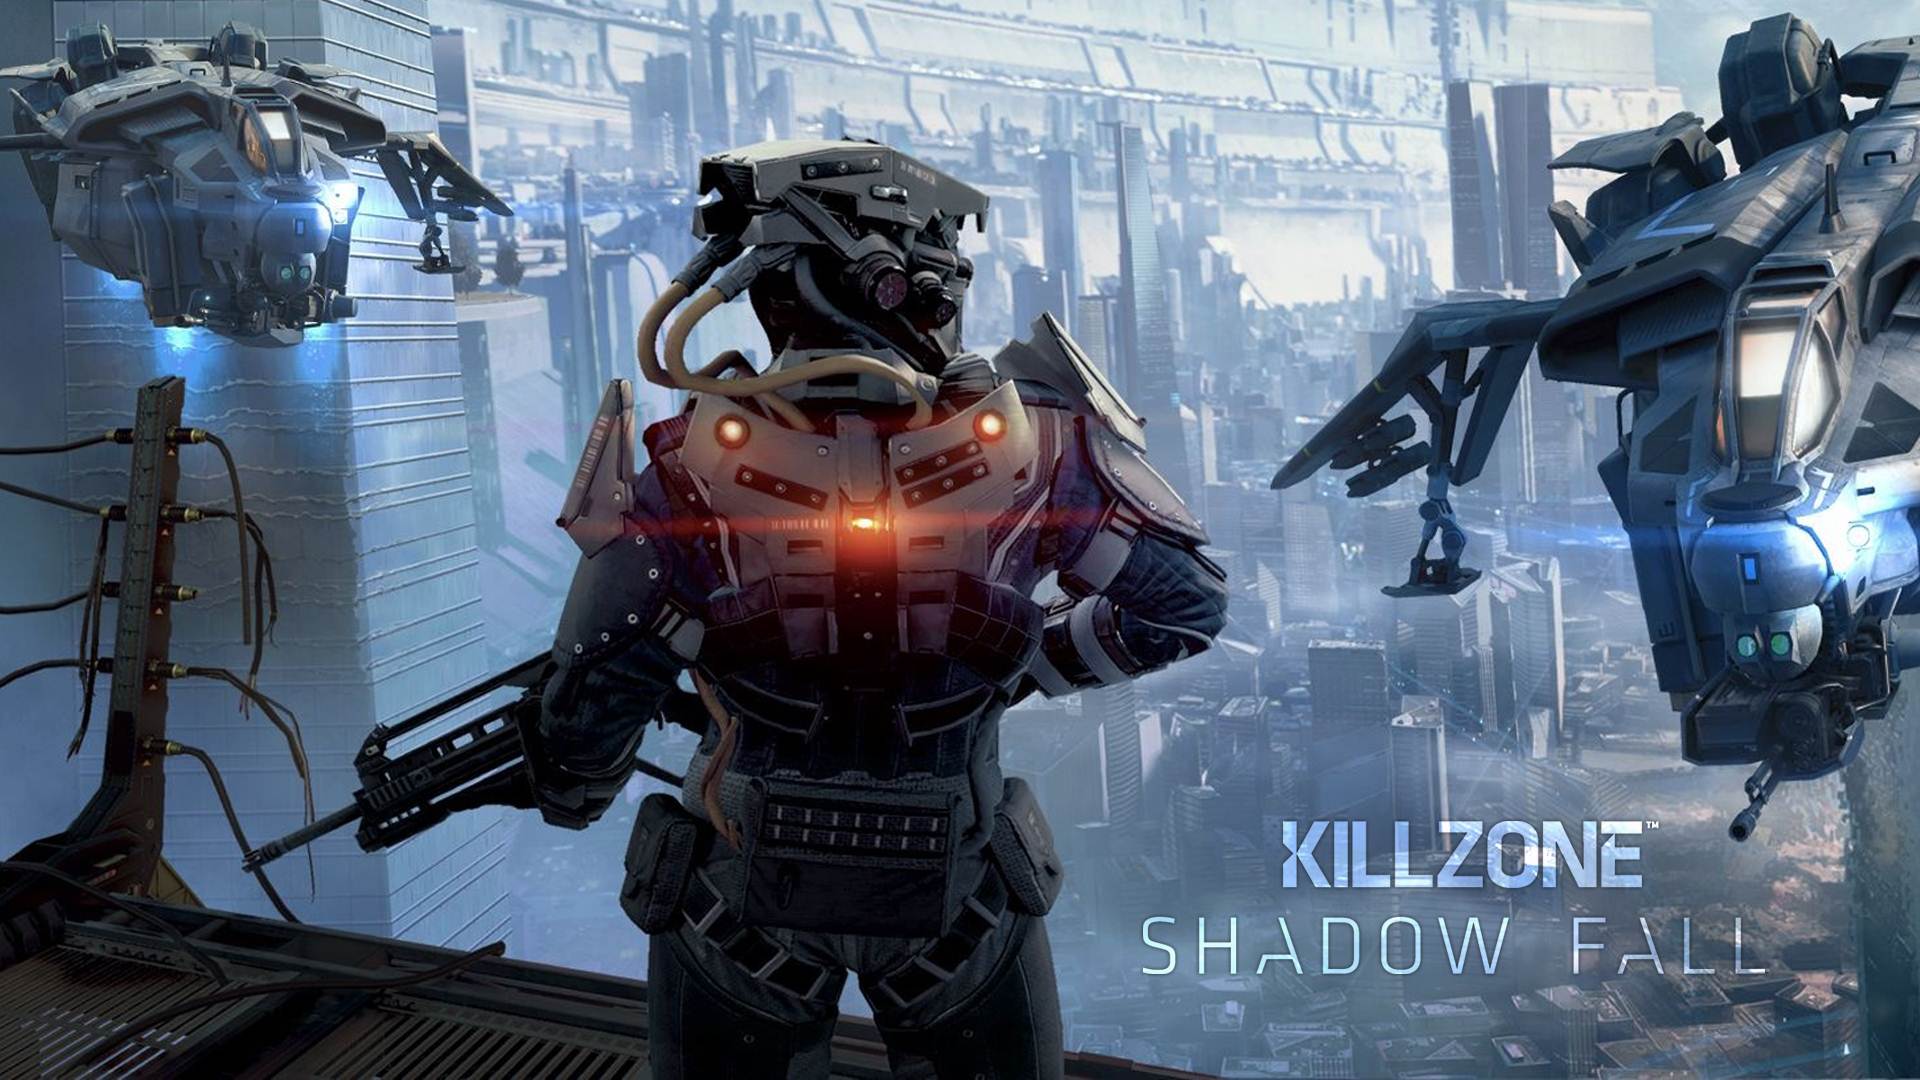 Killzone shadow fall ps4 wallpaper in hd